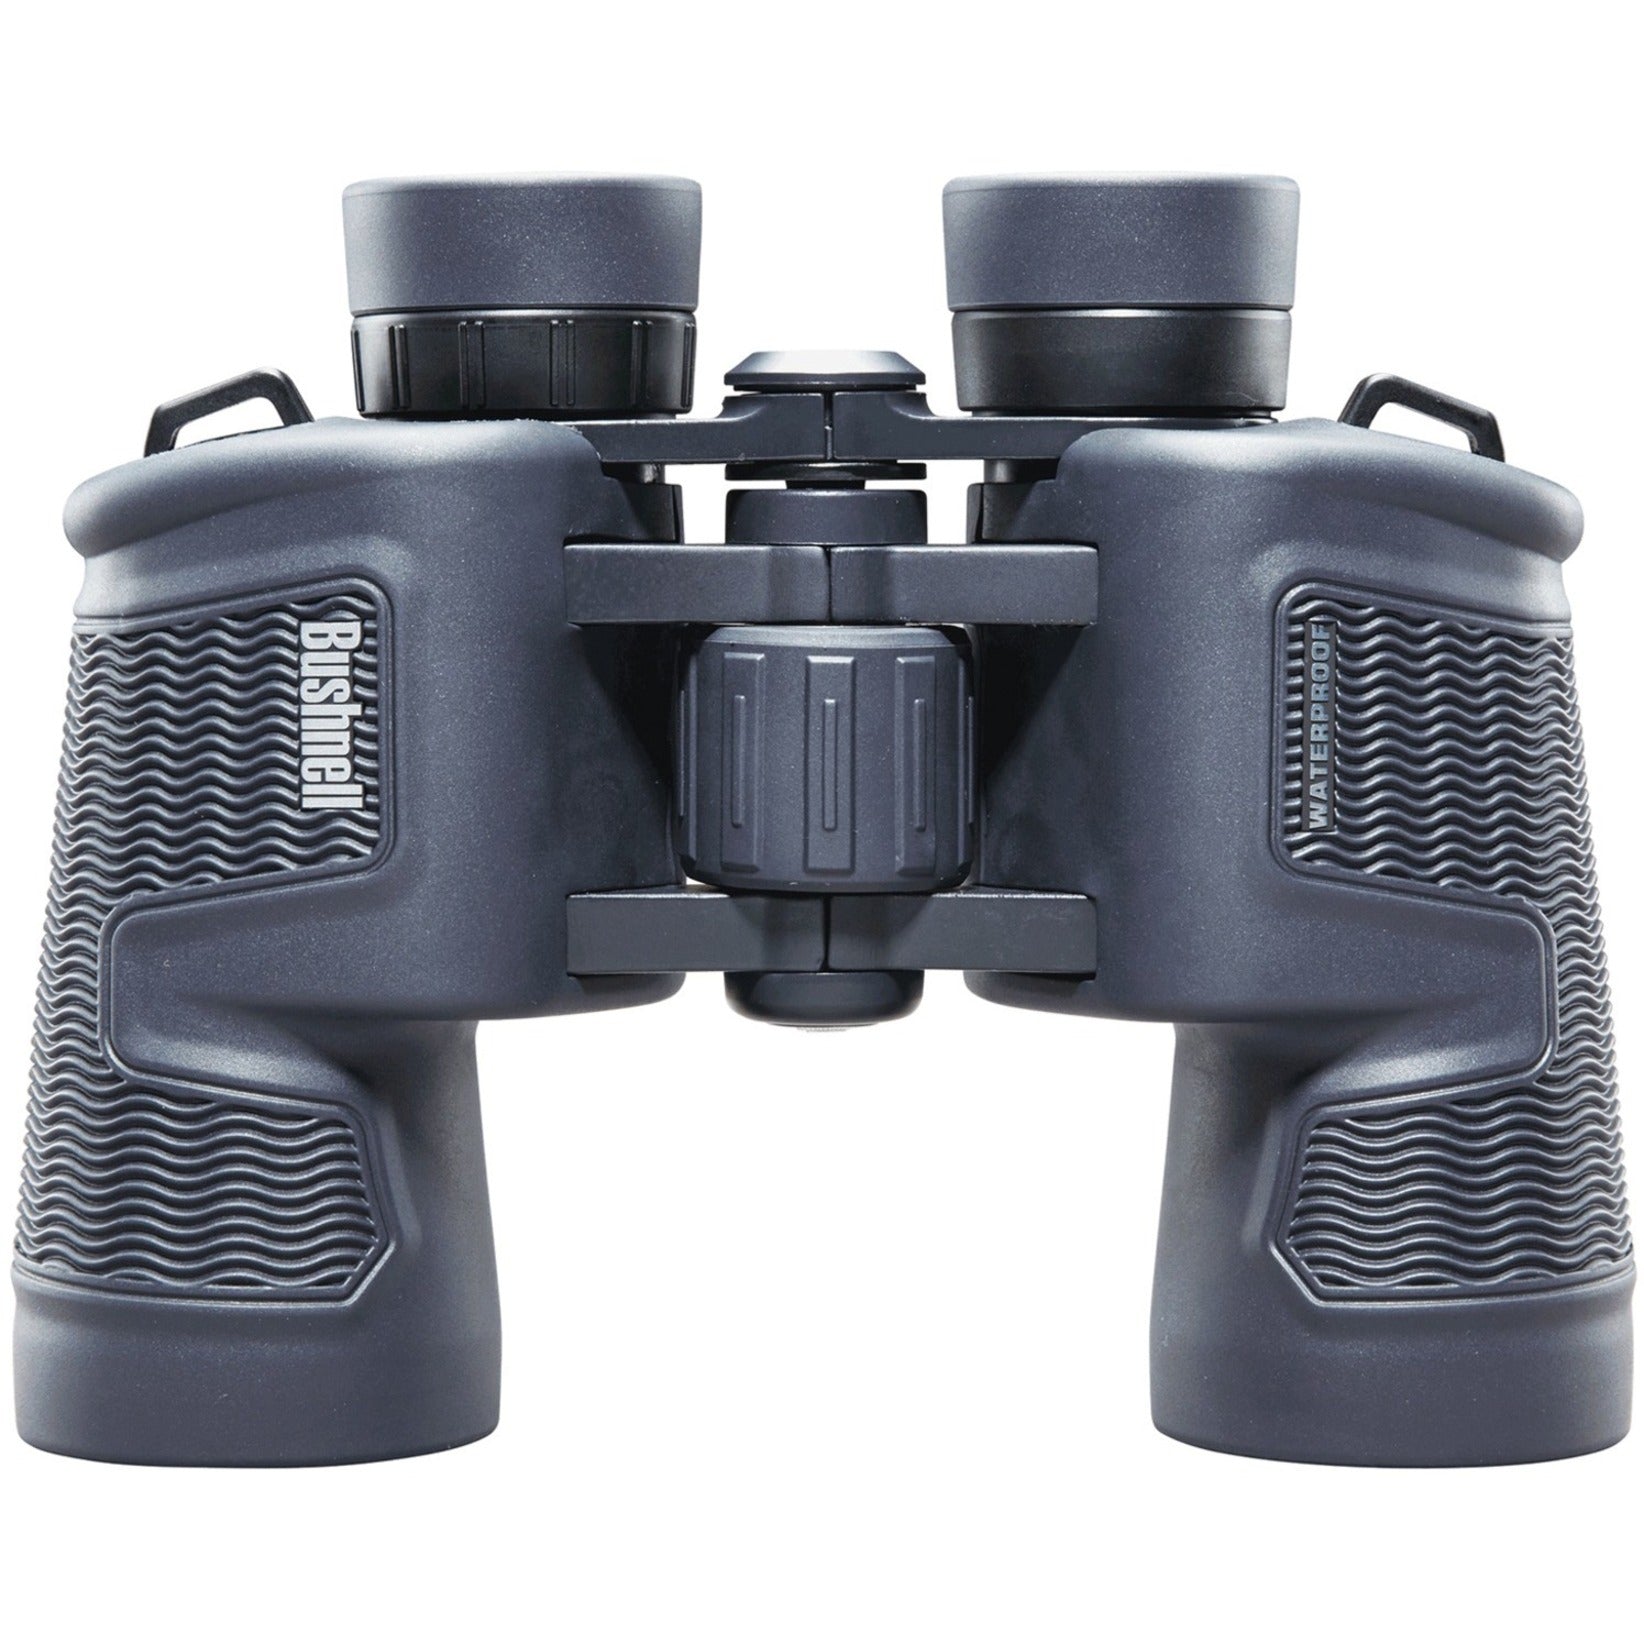 Bushnell 134211 H20 Binocular, 10x42mm, Multi-coated Optics, Twist-up Eyecups